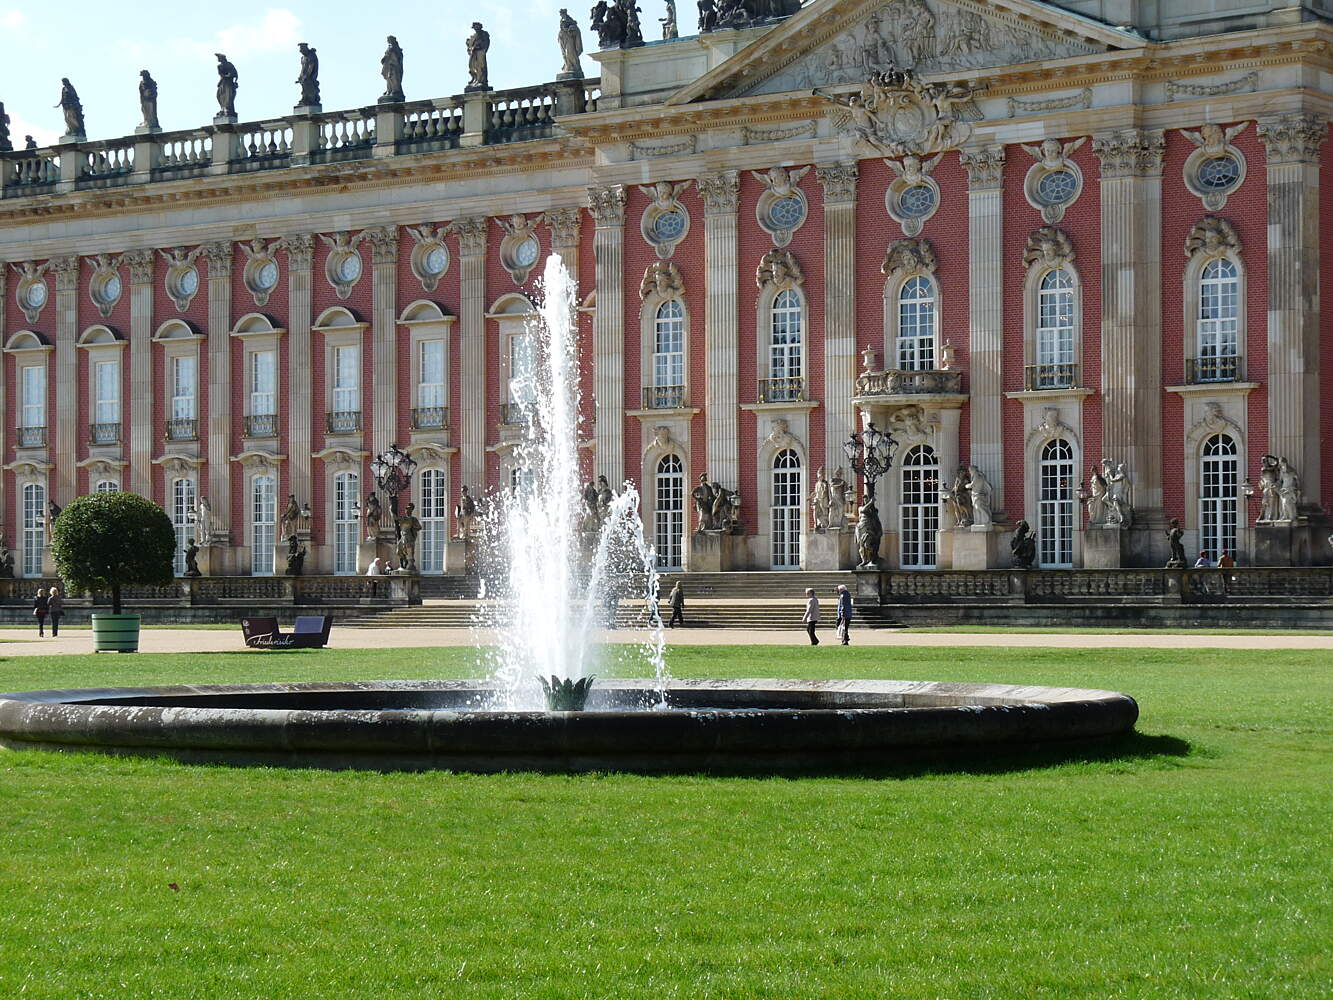 Neuer Garten Potsdam Luxus New Palace – Potsdam – tourist attractions Tropter